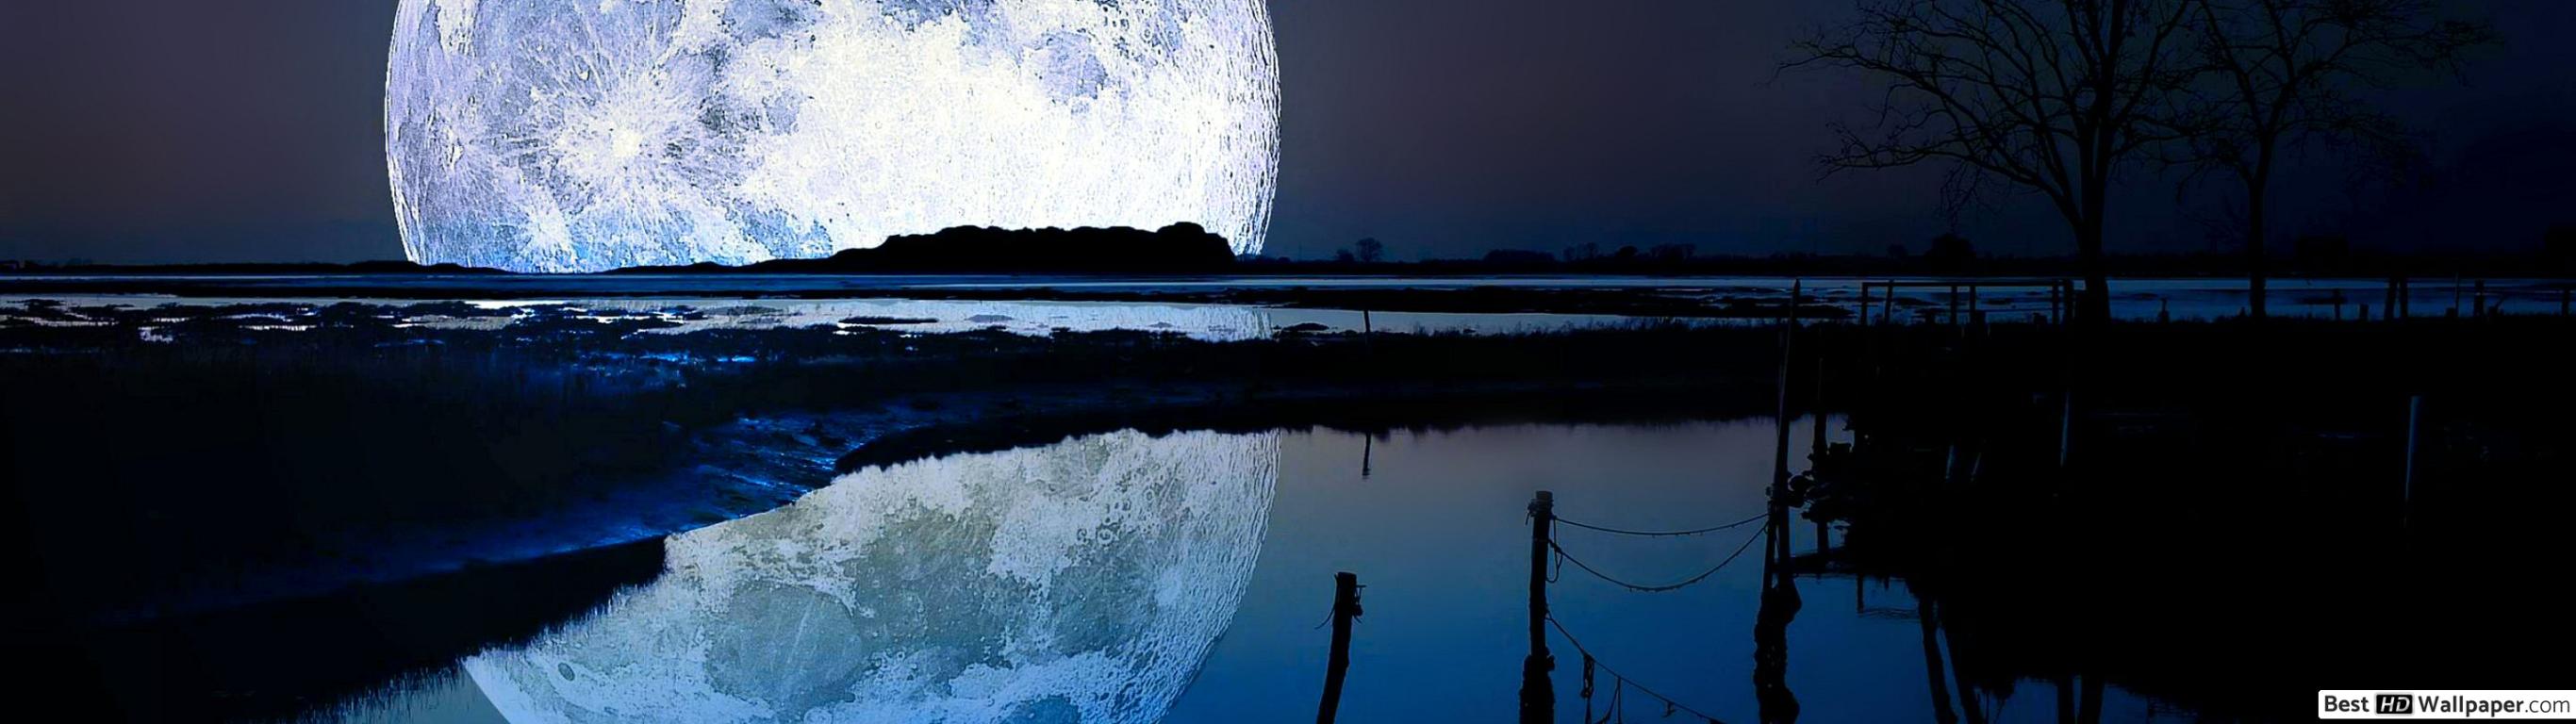 Pemandangn Bulan - HD Wallpaper 